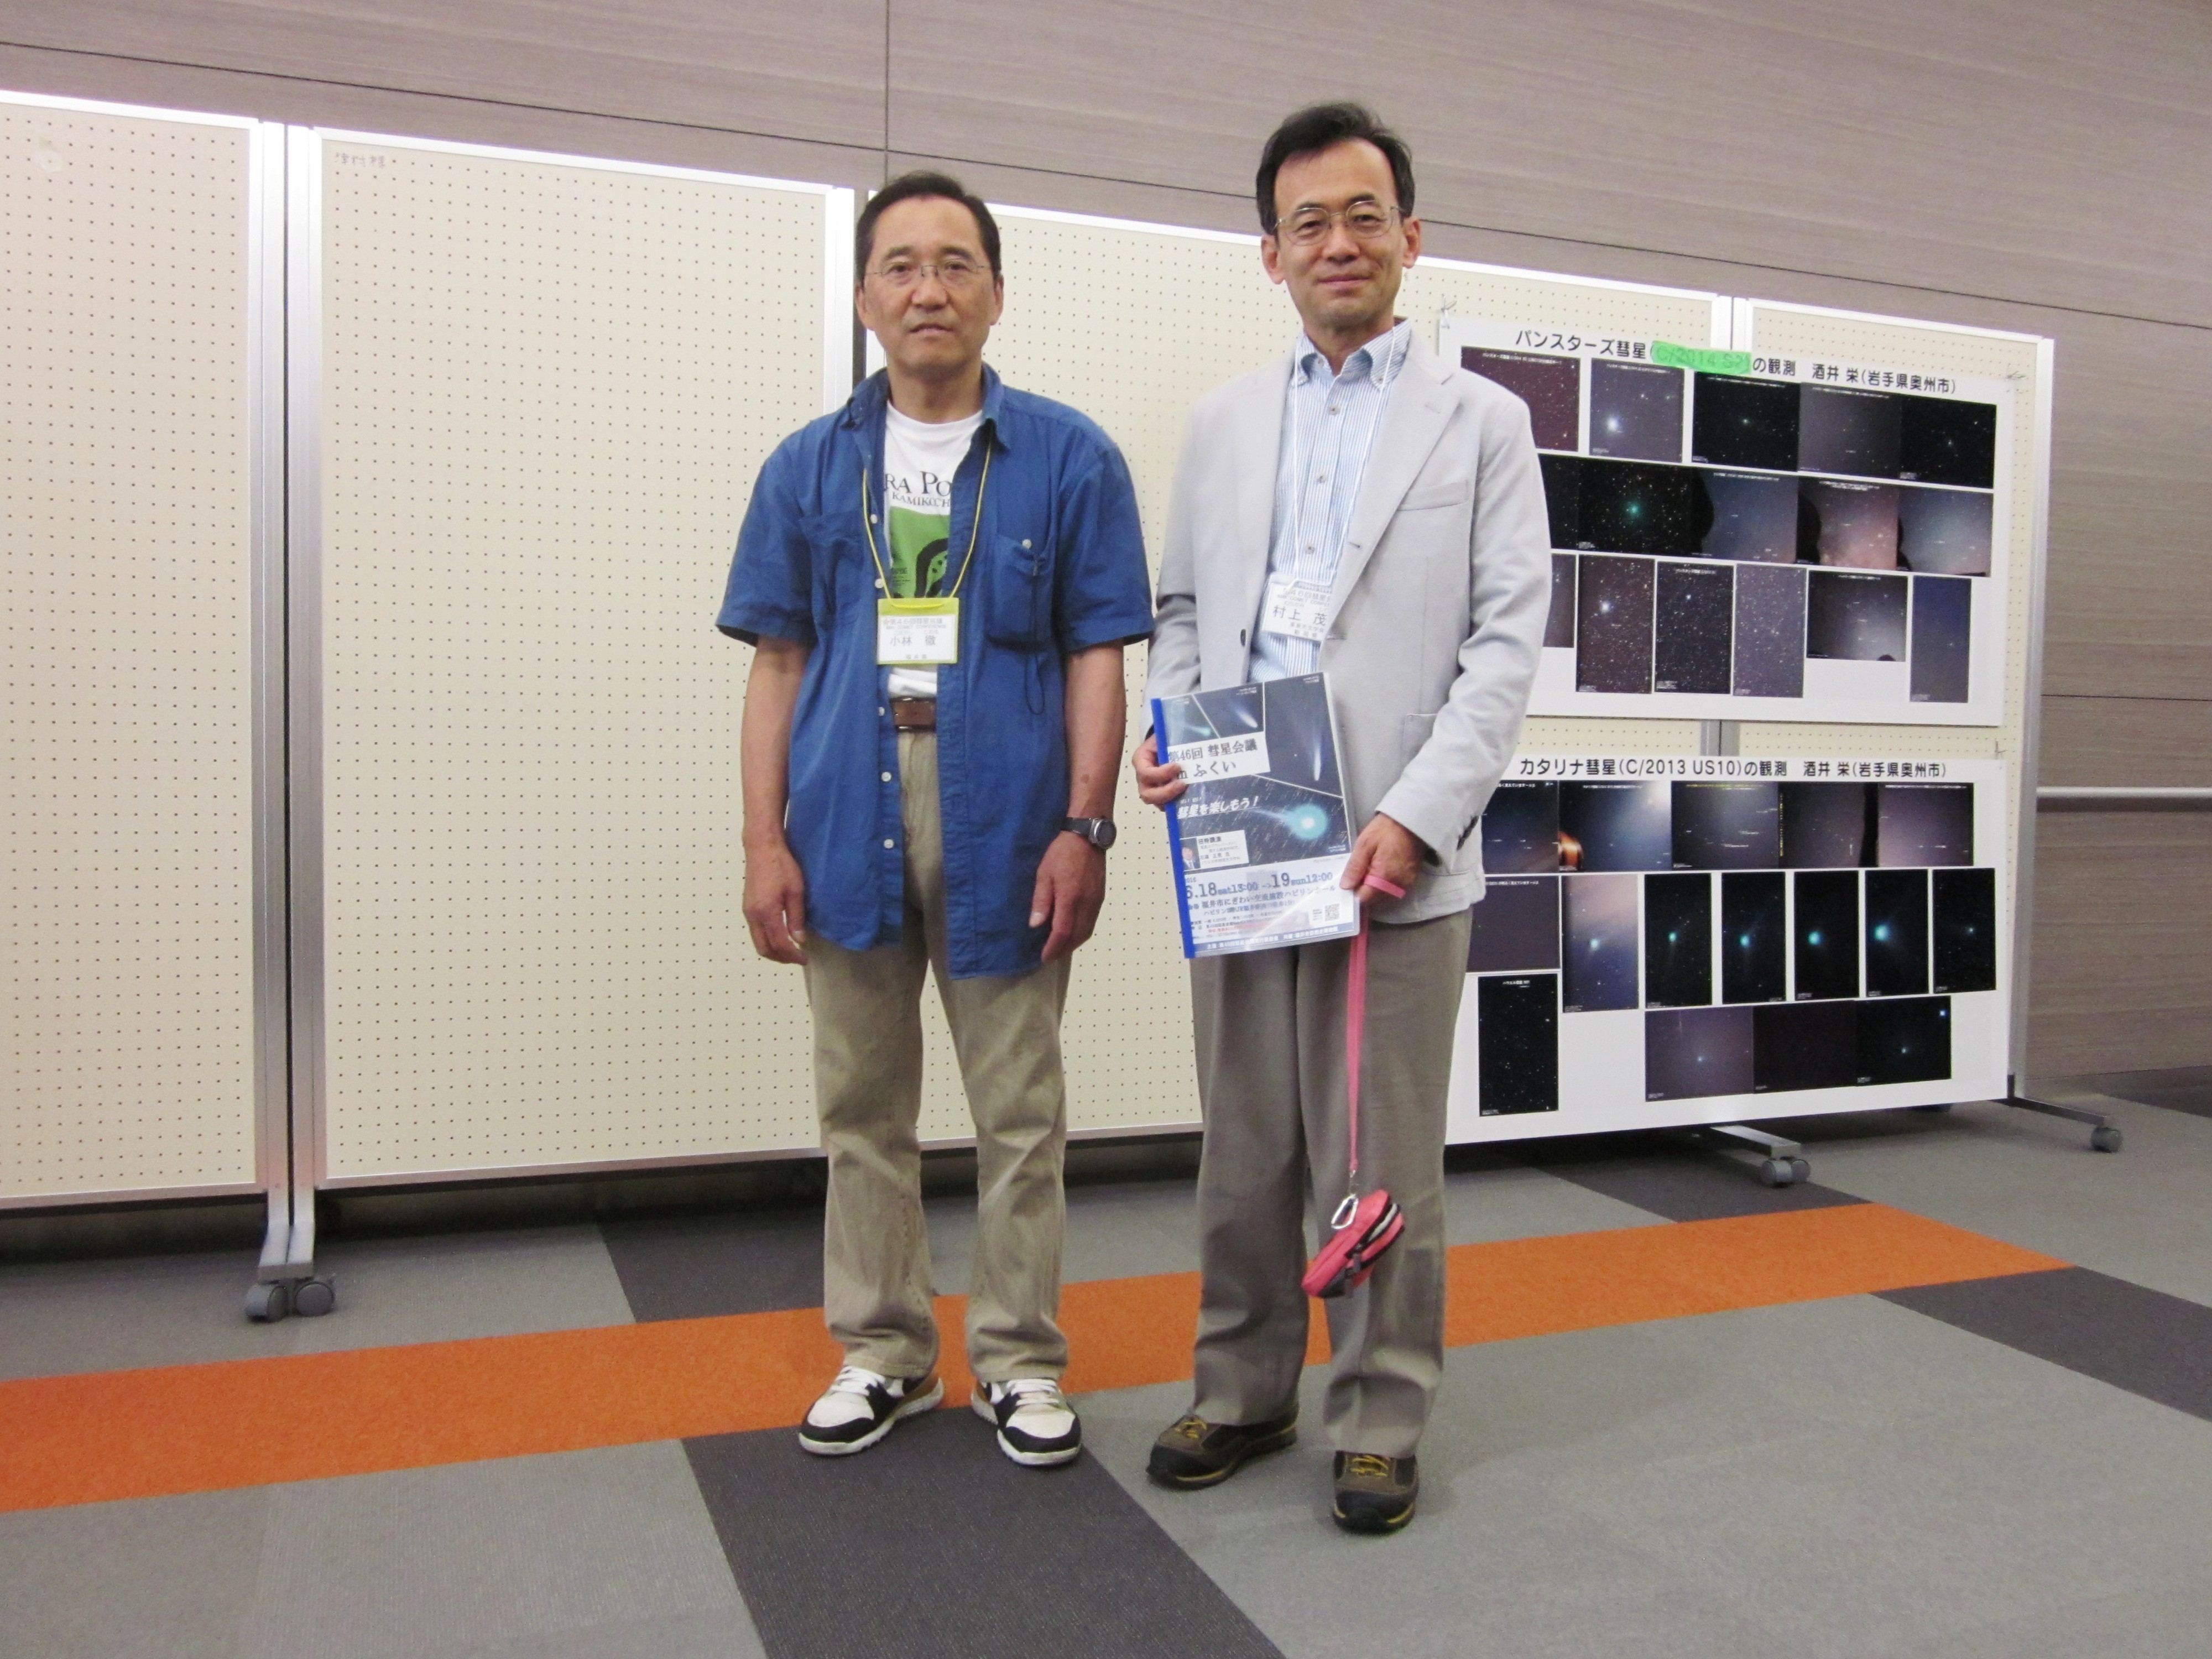 Tooru Kobayashi (left) and Shigeki Murakami at Annual Comet Conference in 2016